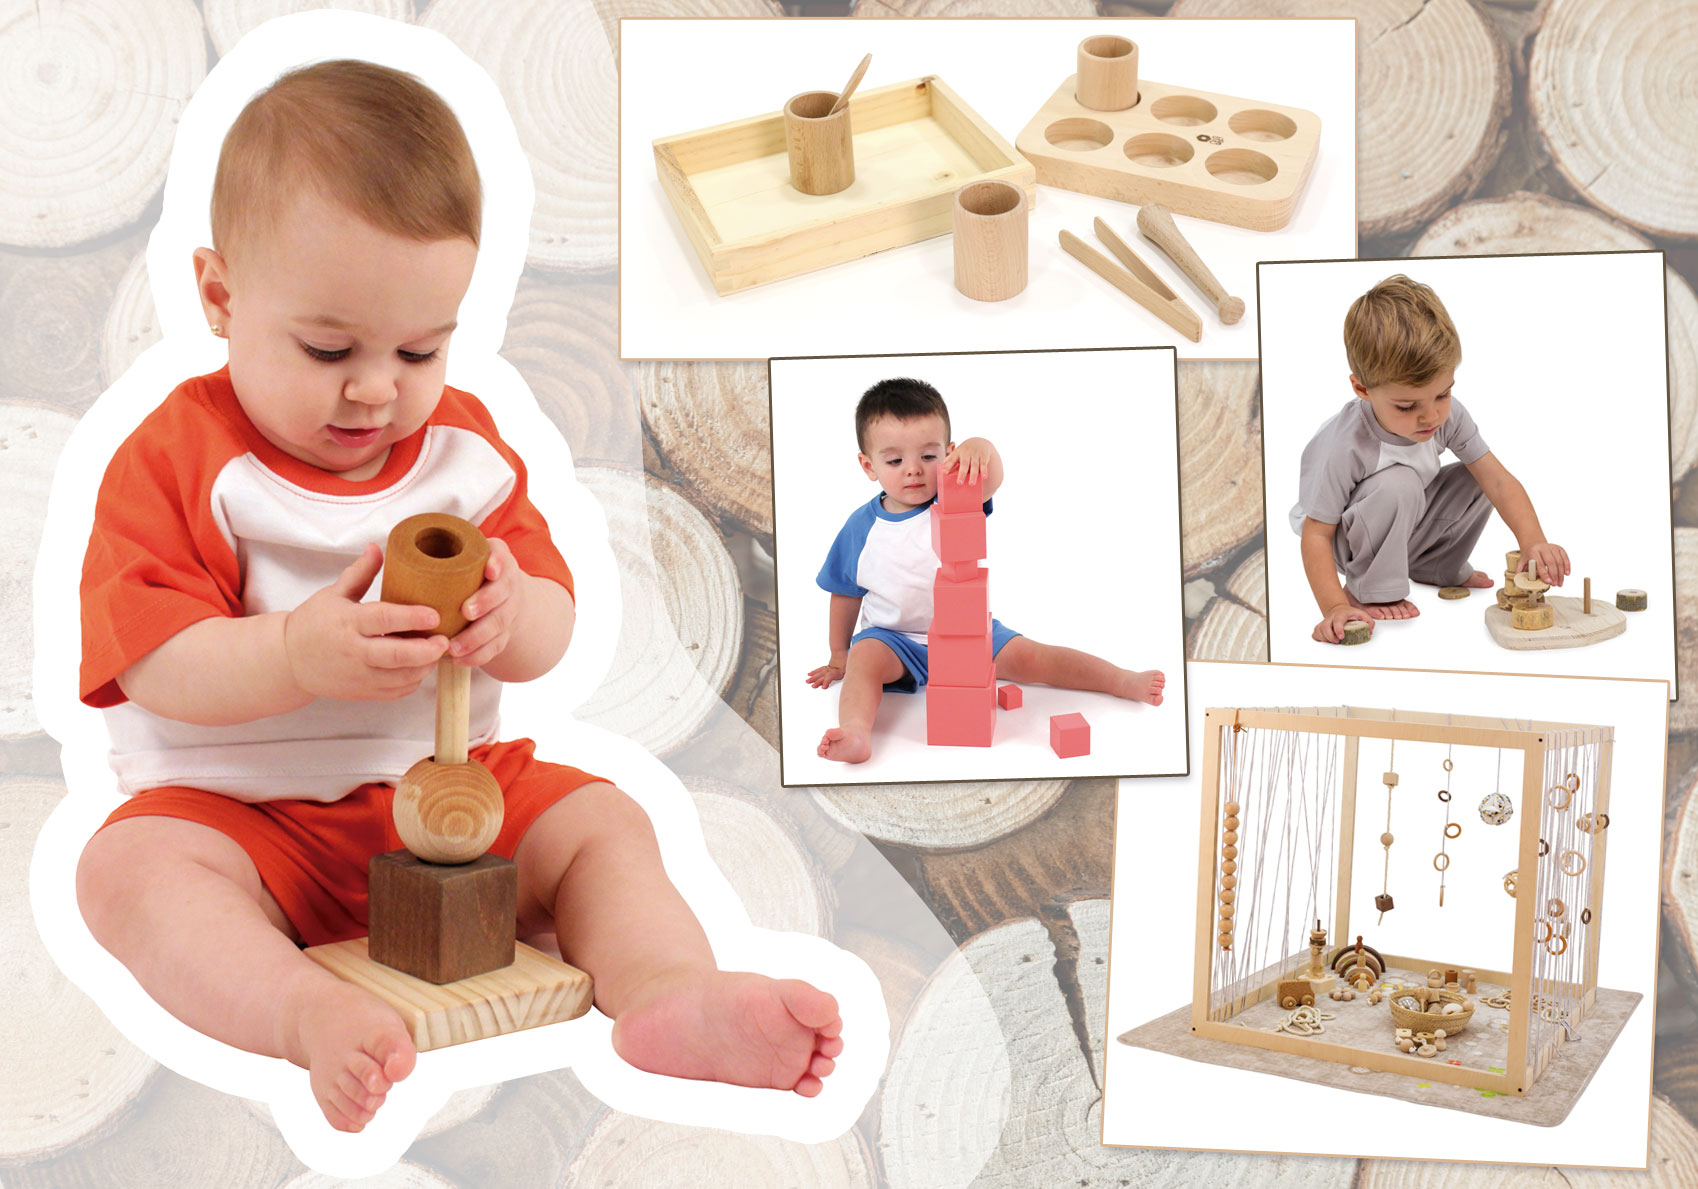 Caja Creativa Montessori, Manualidades para niños, Juguete Educativo para  Niños 6 Años